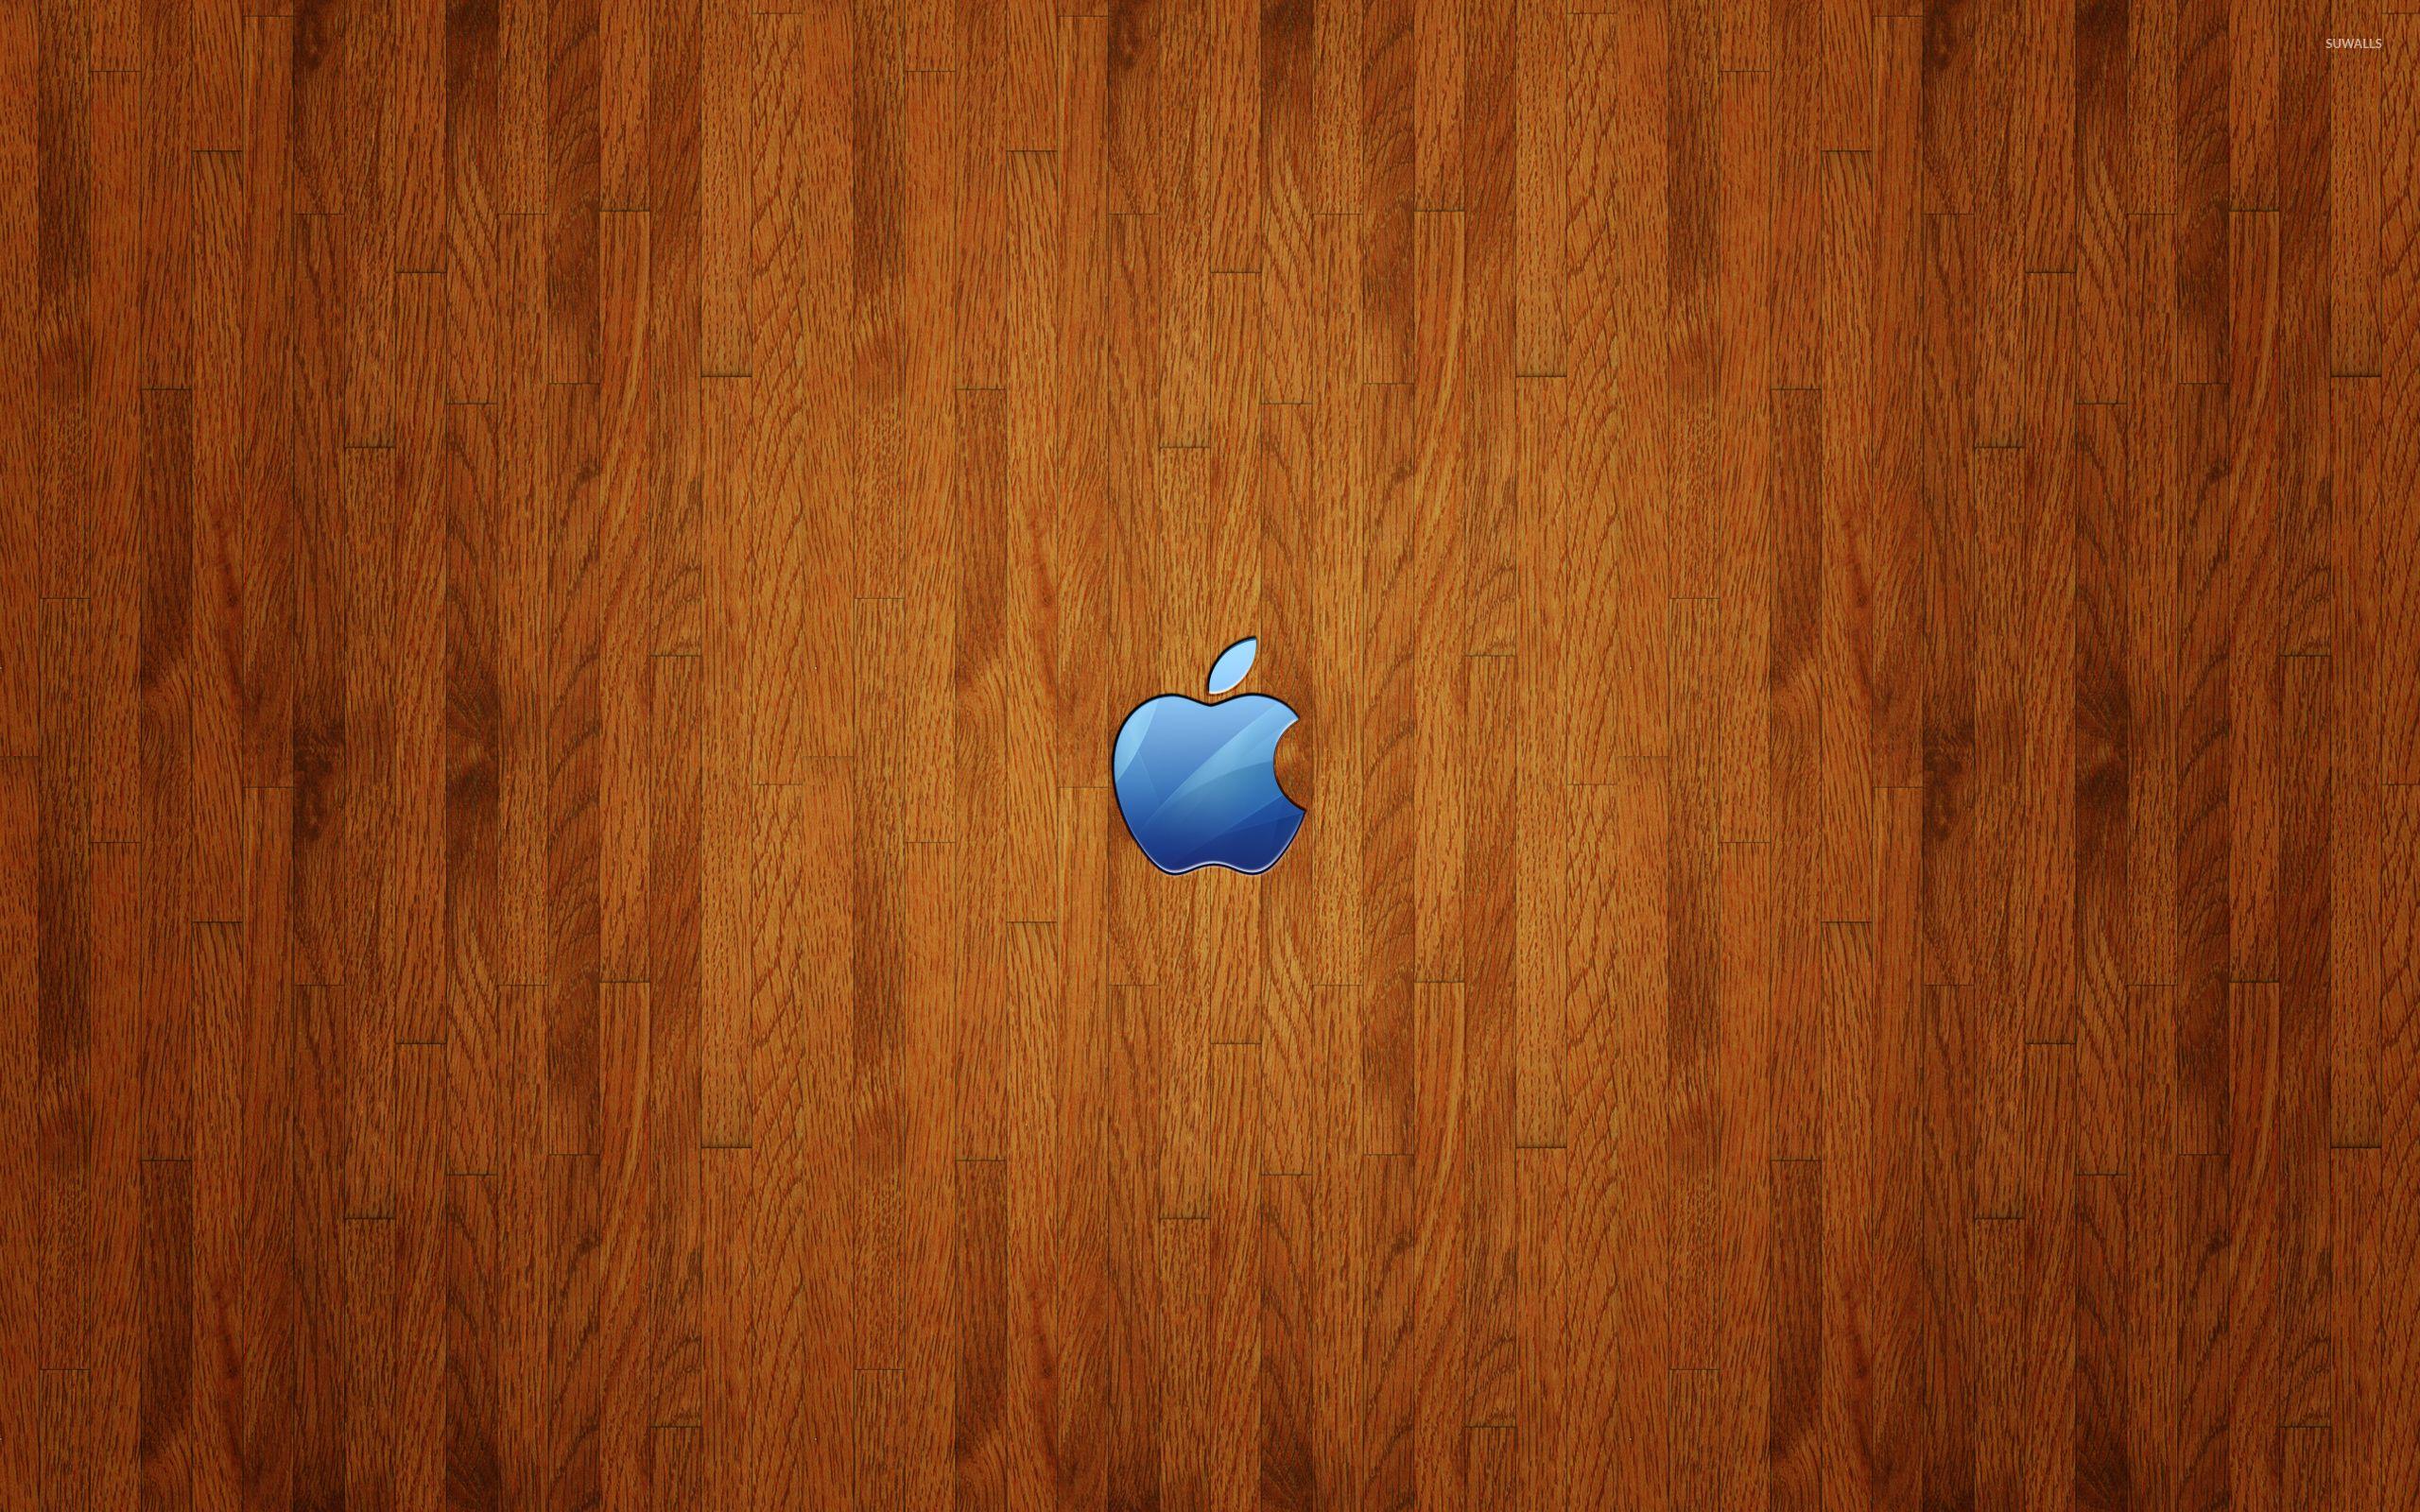 Blue Apple logo on wood wallpaper wallpaper